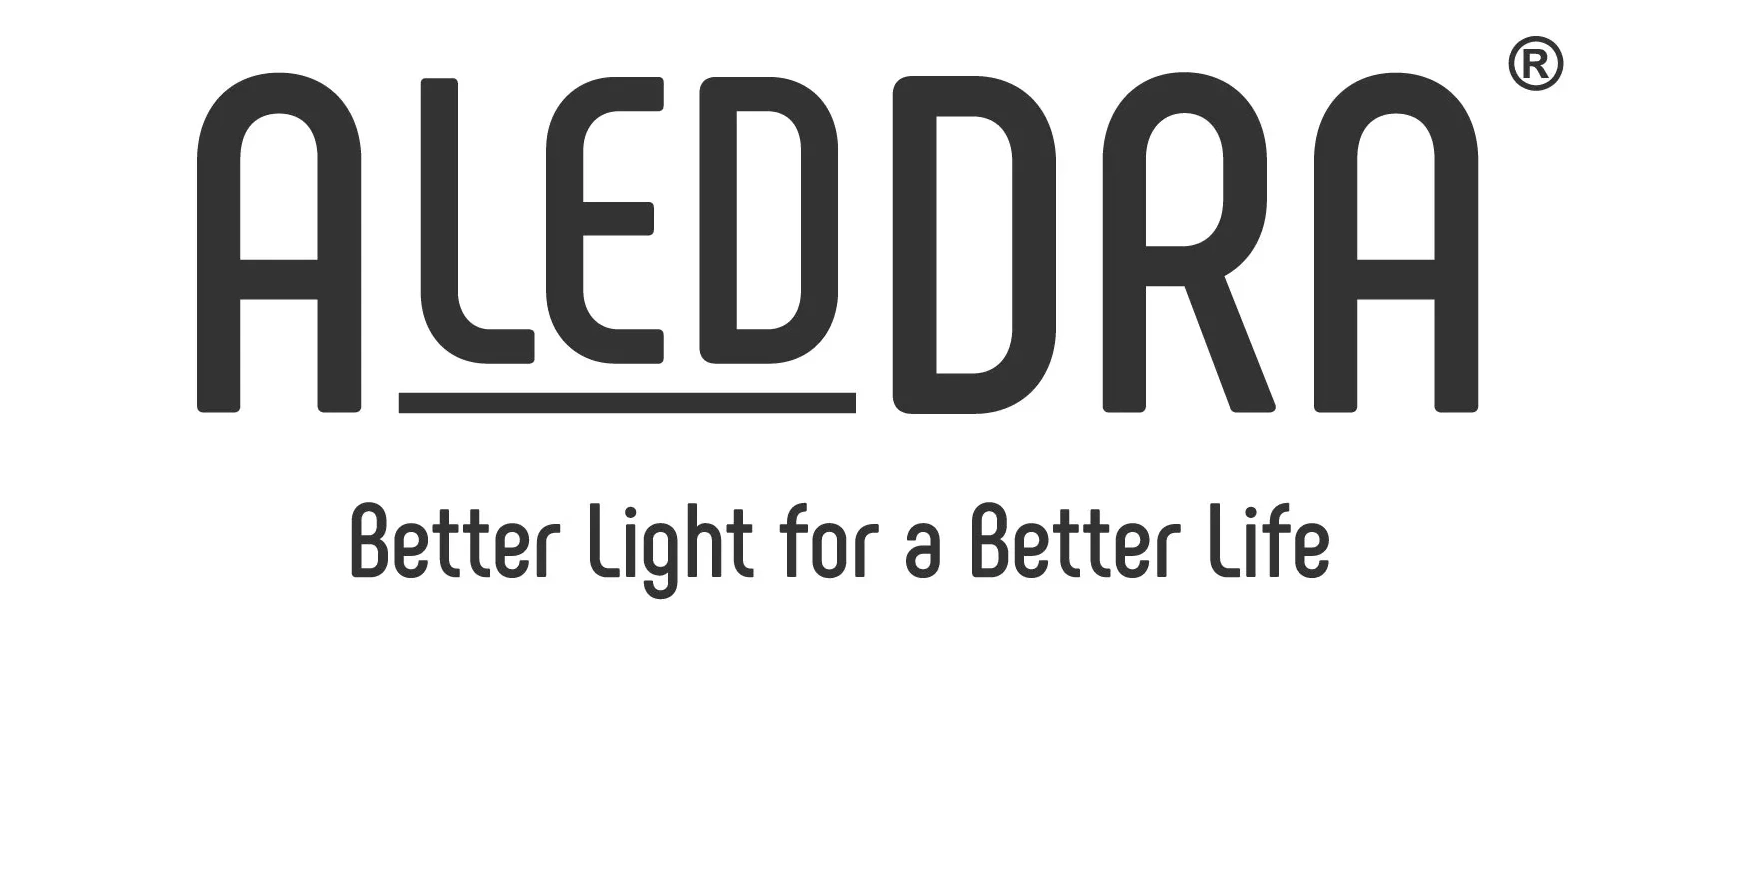 Aleddra LED manufacturer of LED products and innovative tube technologies.